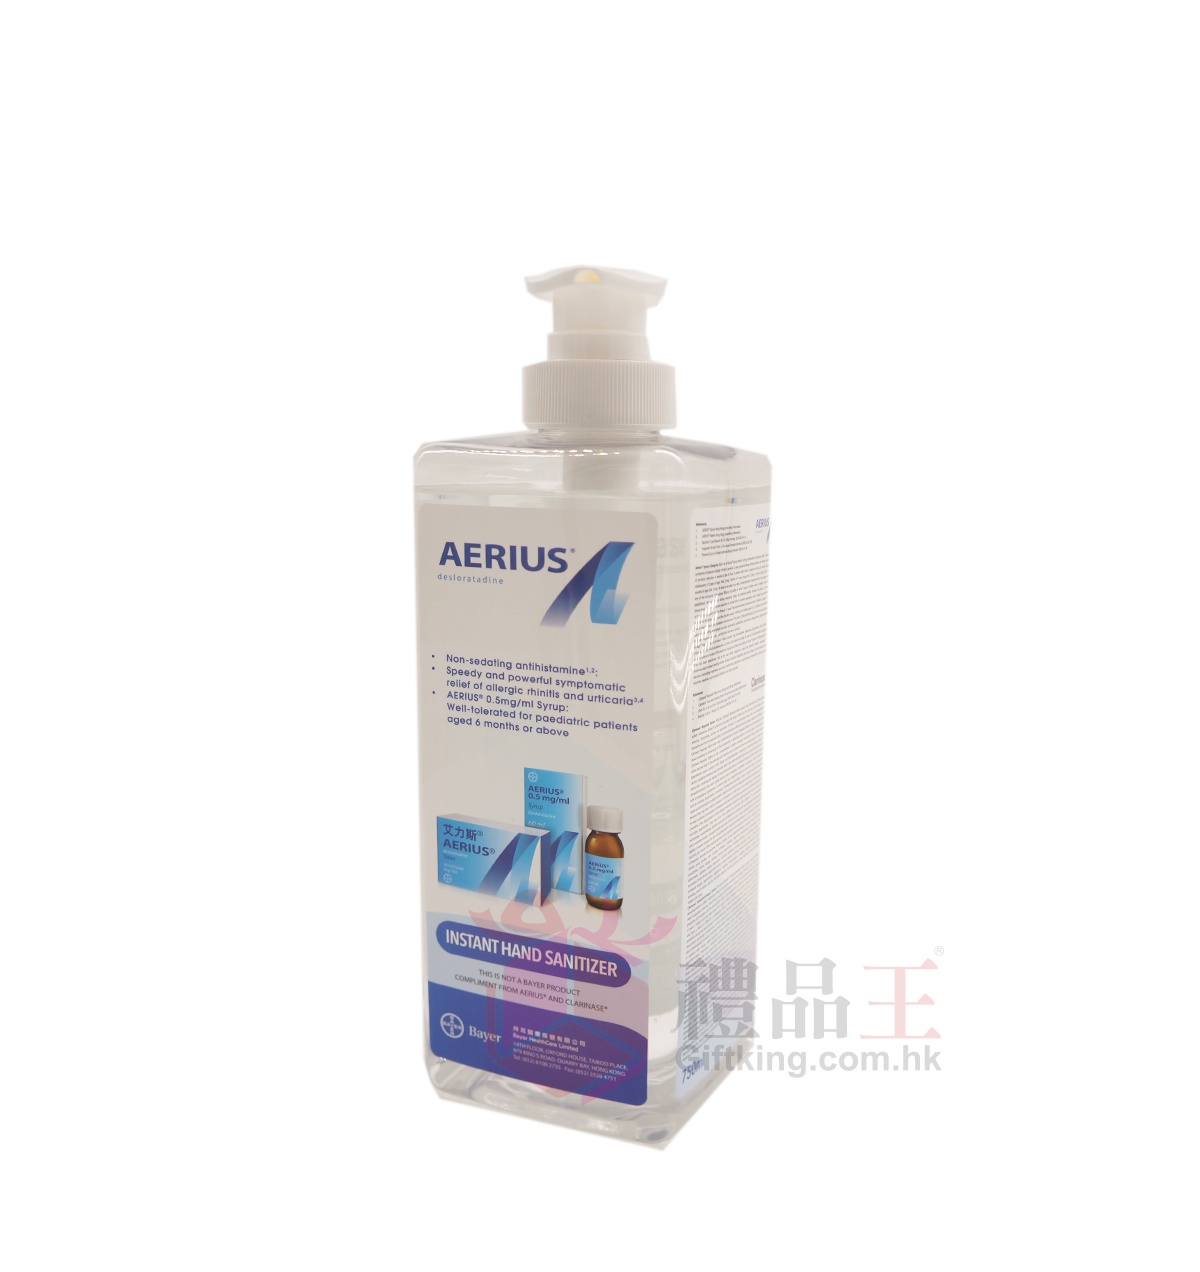 AERIUS Instant Hand Sanitizer (Epidemic Prevention Gift)